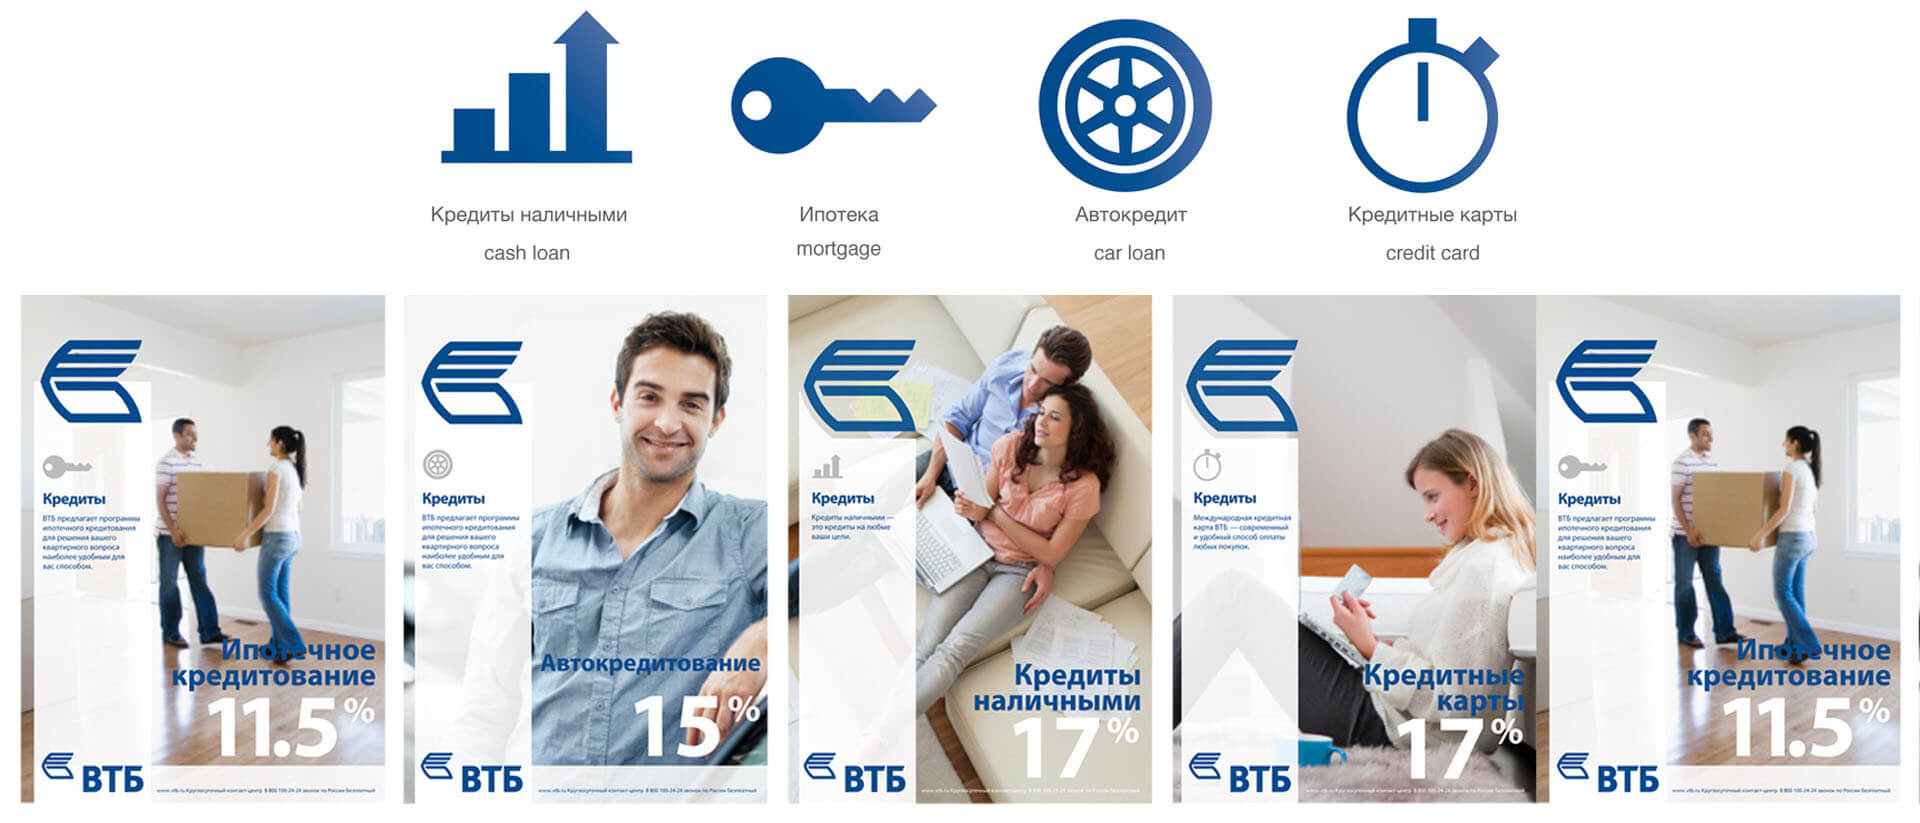 VTB convenience mini bank marketing communications